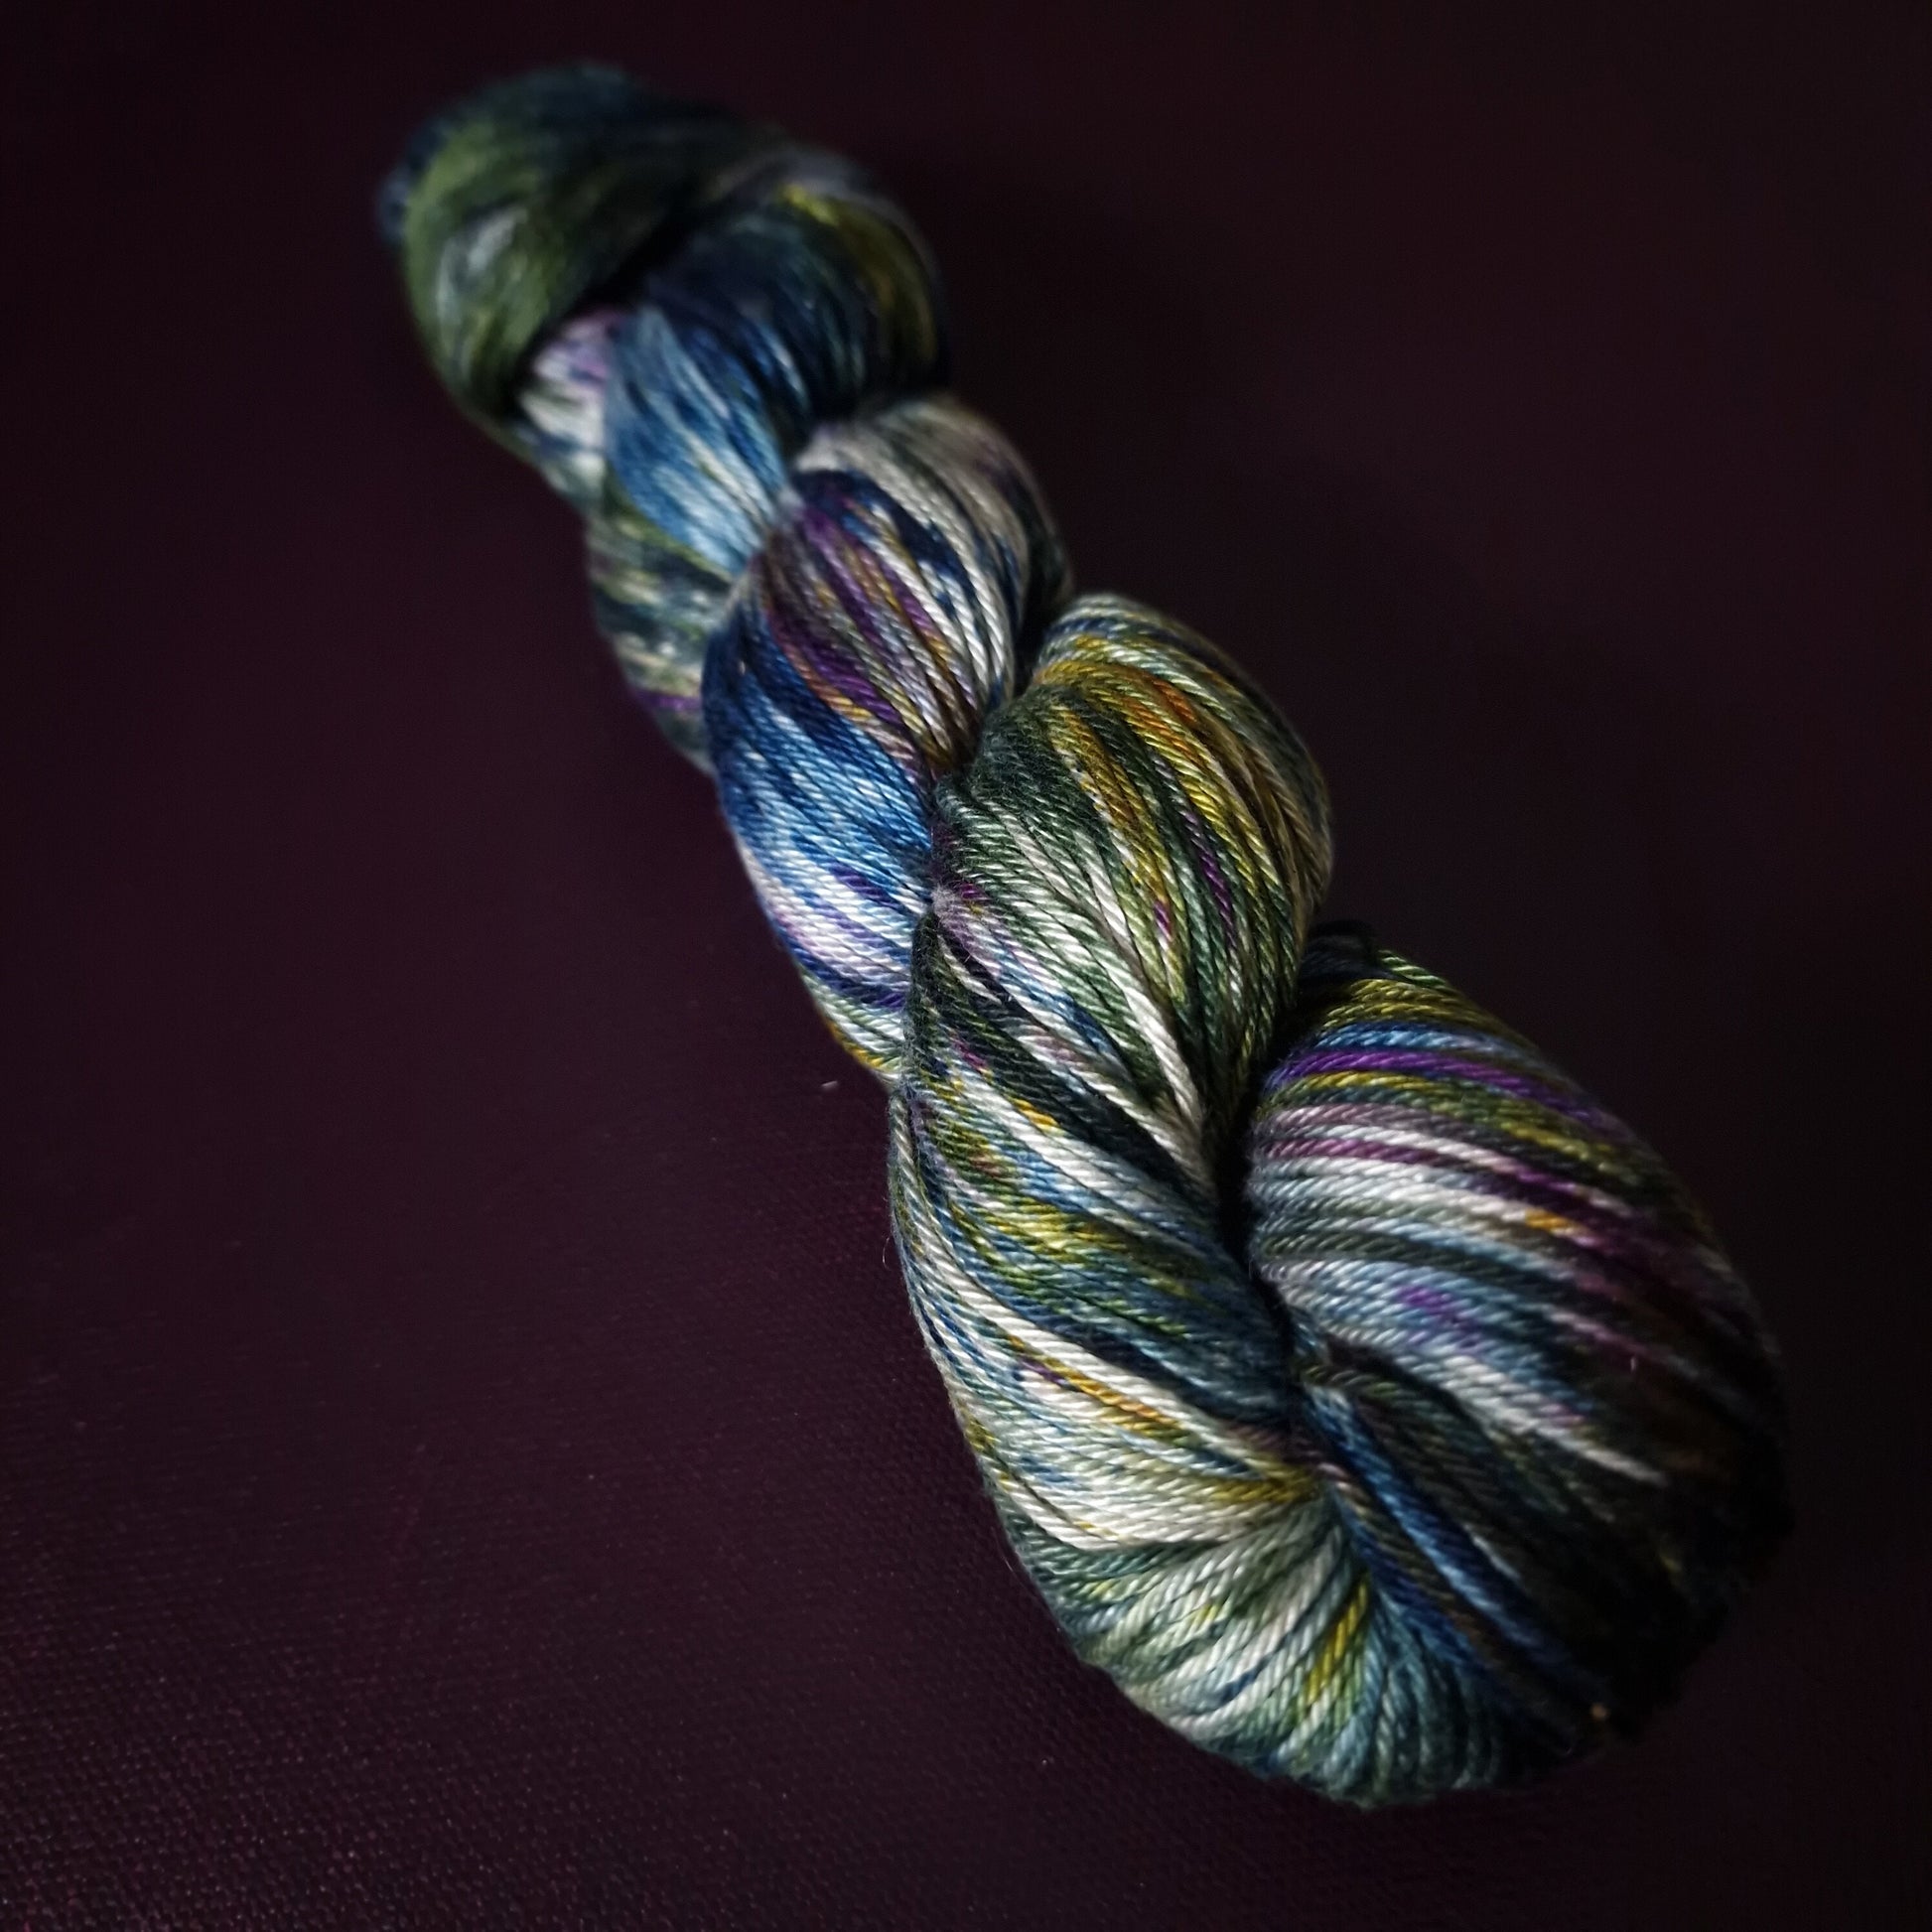 Hand dyed yarn ~ AuroraDelight ~ mercerized cotton yarn, vegan, hand painted, indie dyed